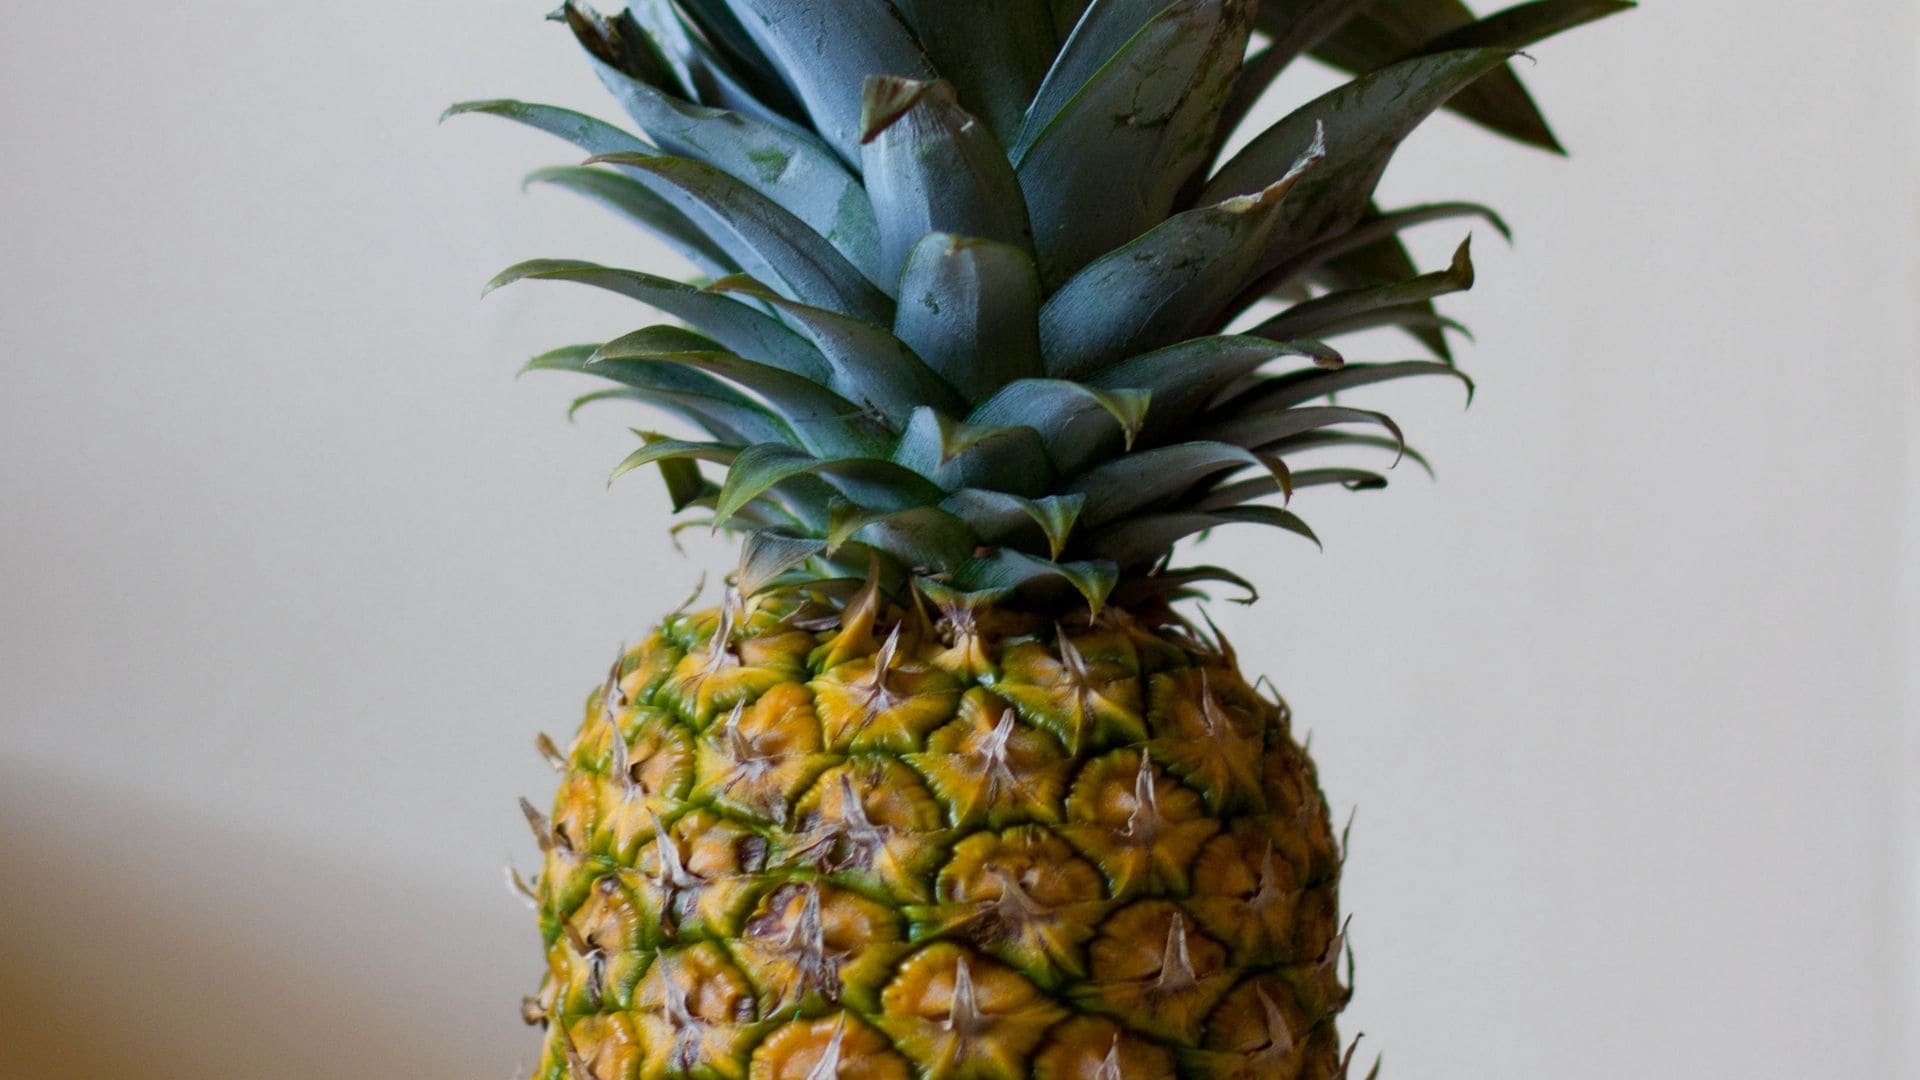 Pineapple: An herbaceous perennial tropical plant bearing an edible fruit. 1920x1080 Full HD Wallpaper.